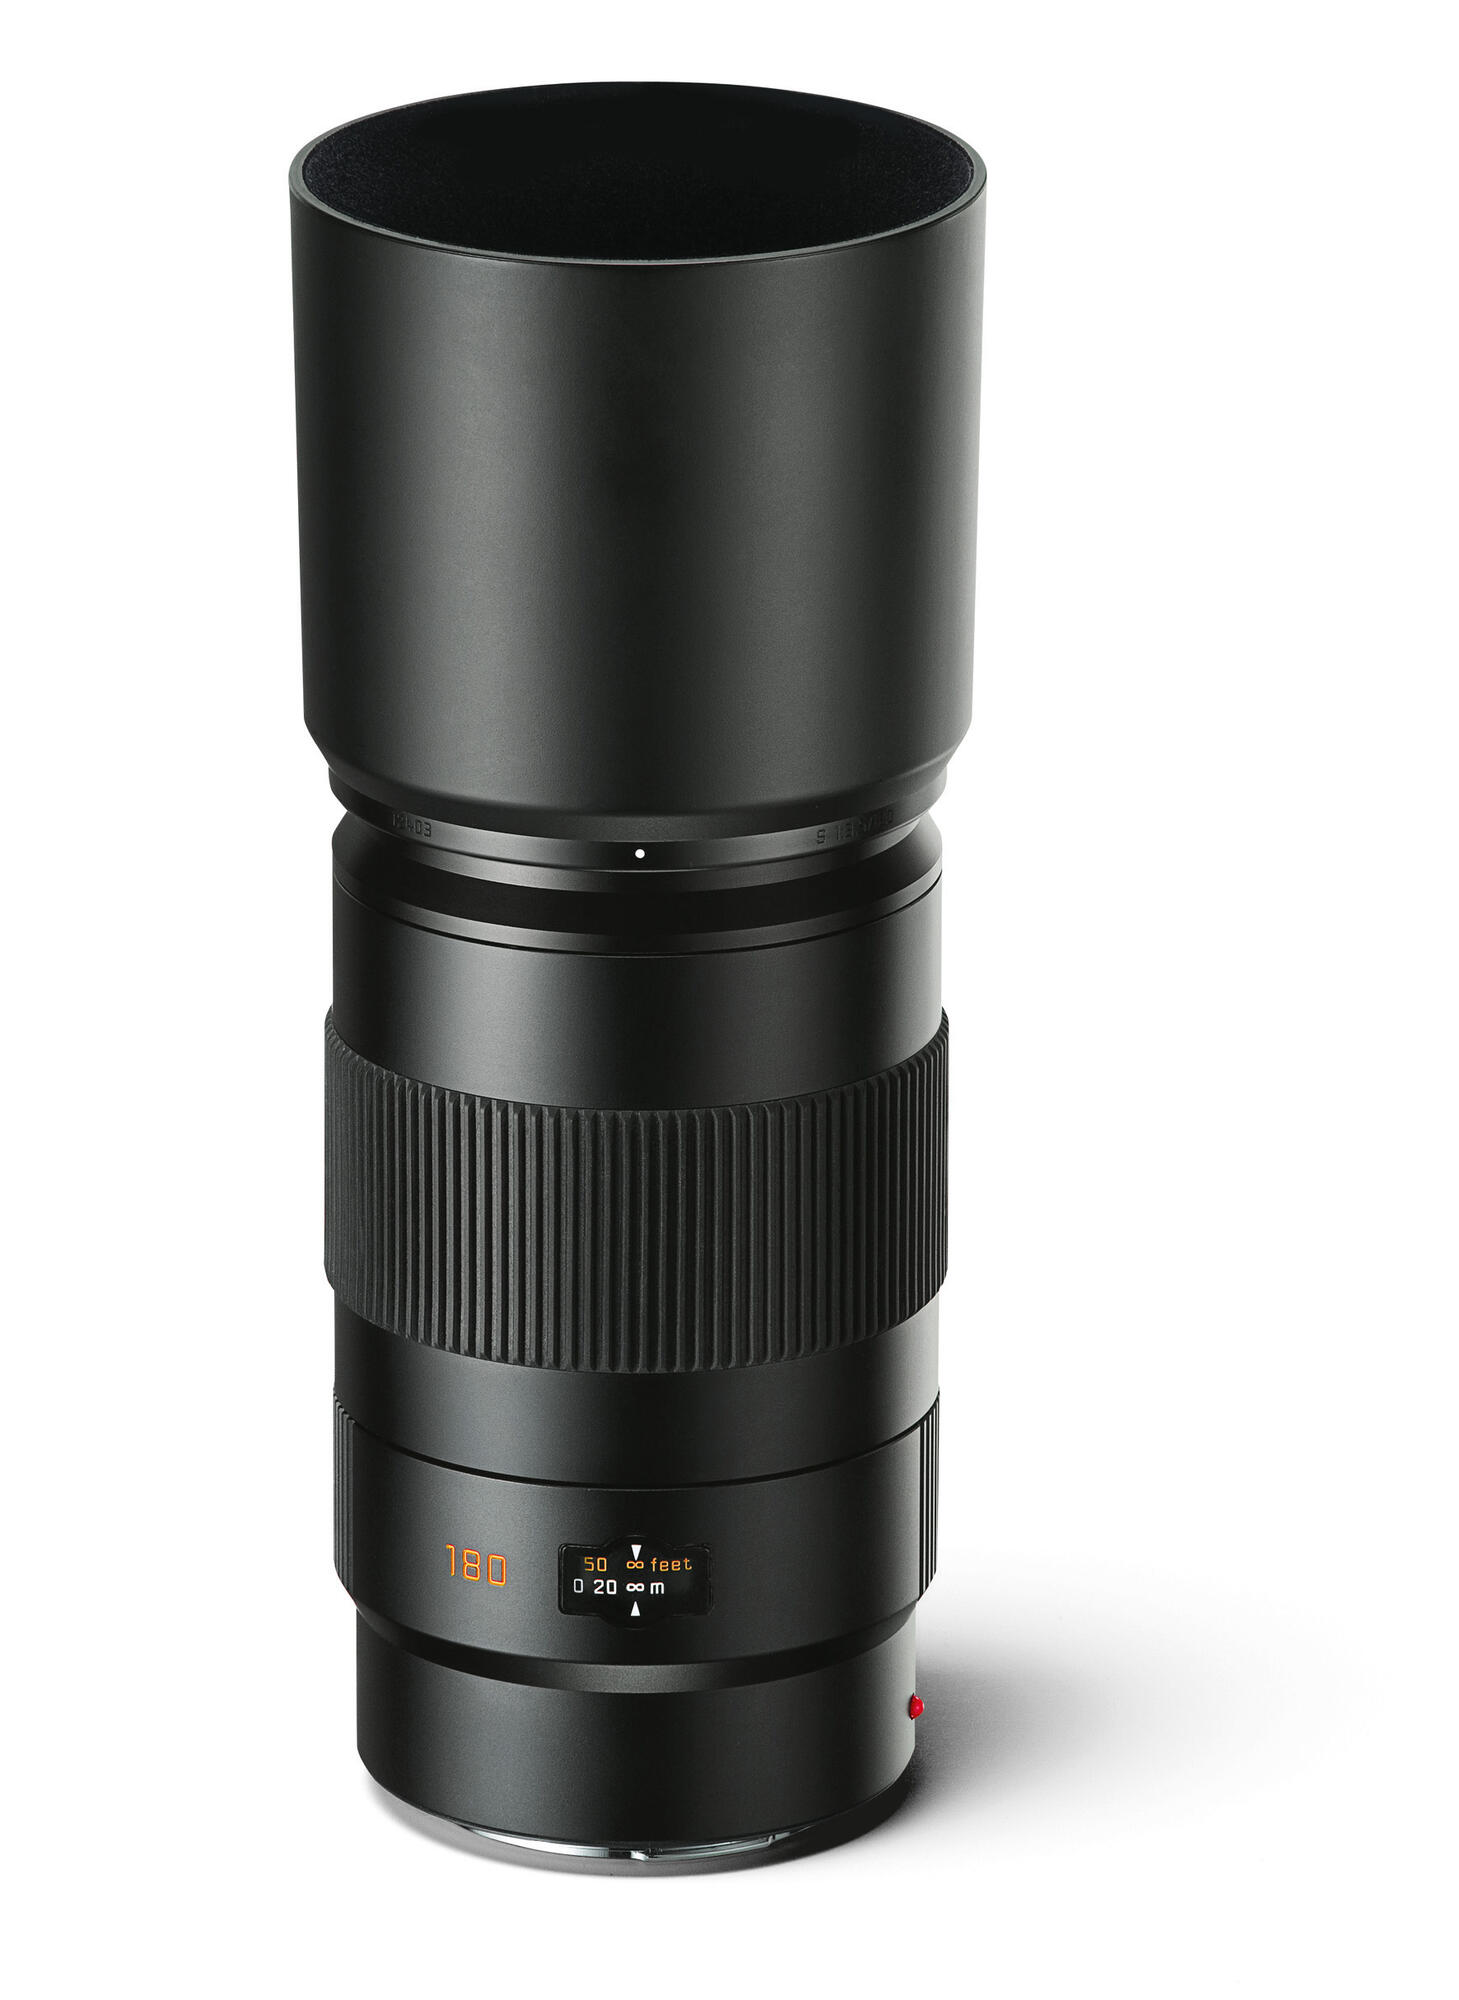 APO-Elmar-S 180 f/3.5 | Leica Camera AG